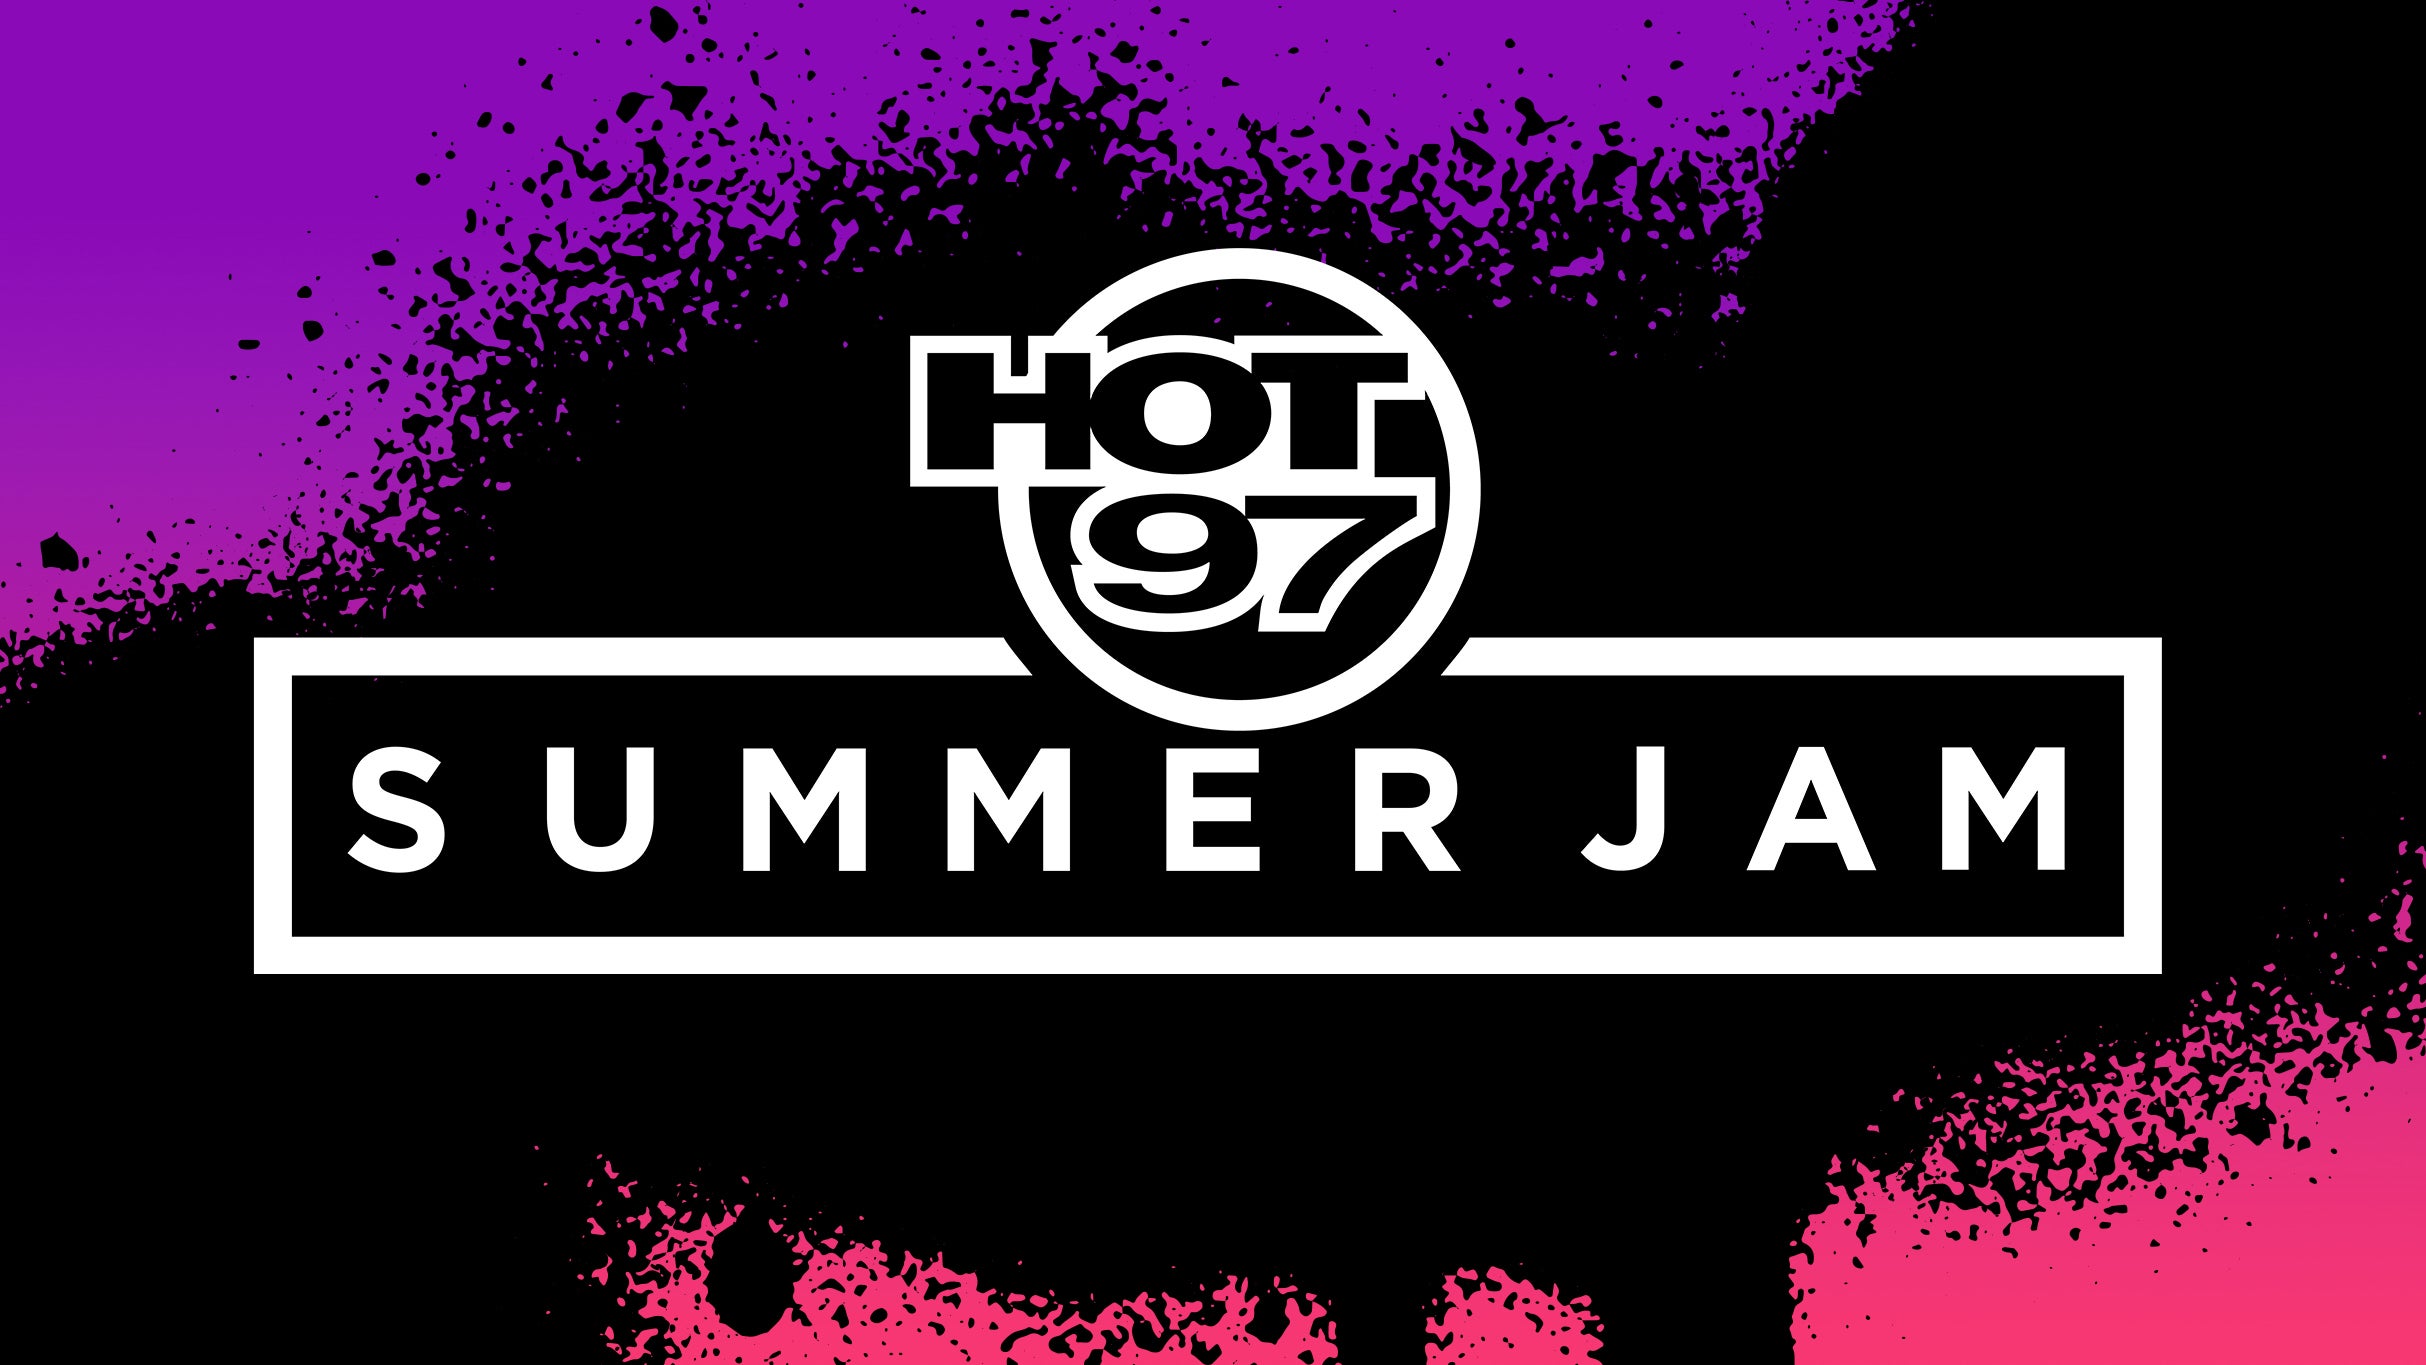 HOT 97 Summer Jam in Belmont Park promo photo for Hot 97 presale offer code